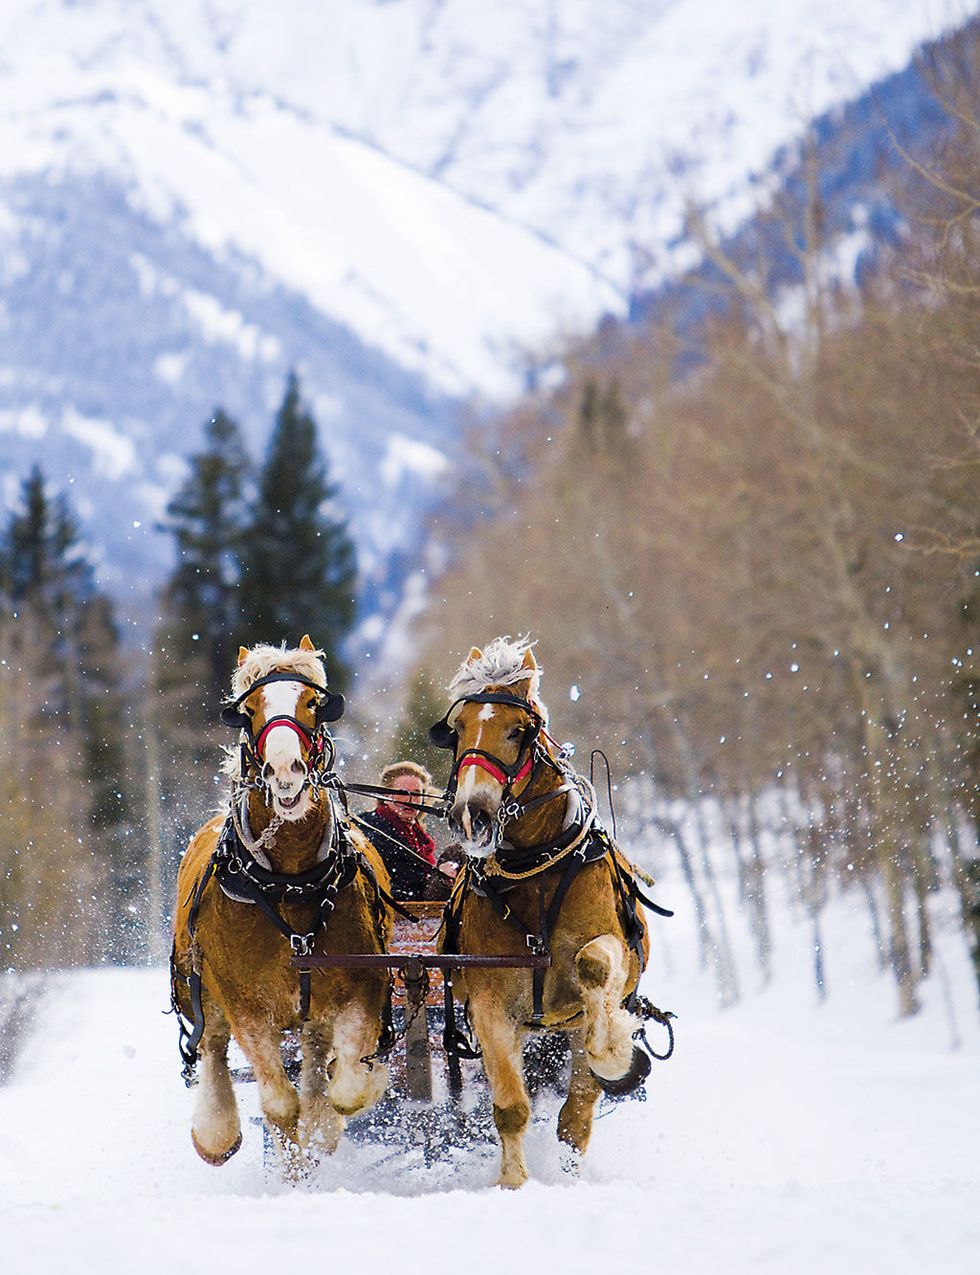 Human, Winter, Halter, Working animal, Rein, Horse supplies, Snow, Bridle, Horse tack, Pack animal, 